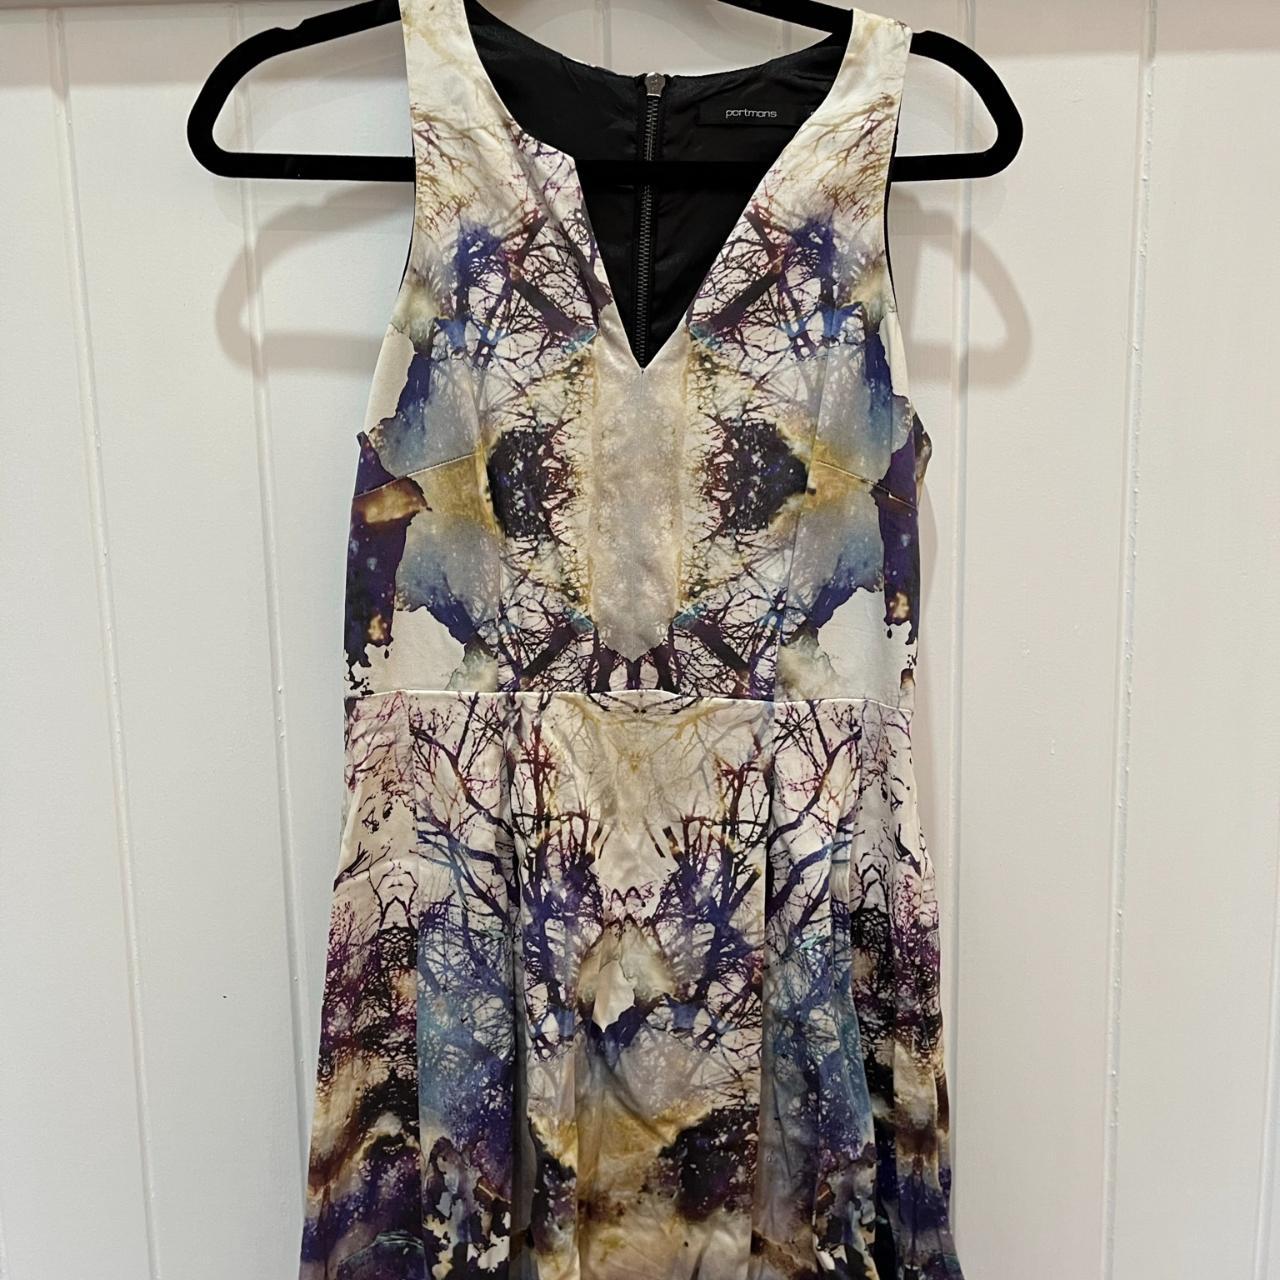 Portmans floral dress size 8 - Depop